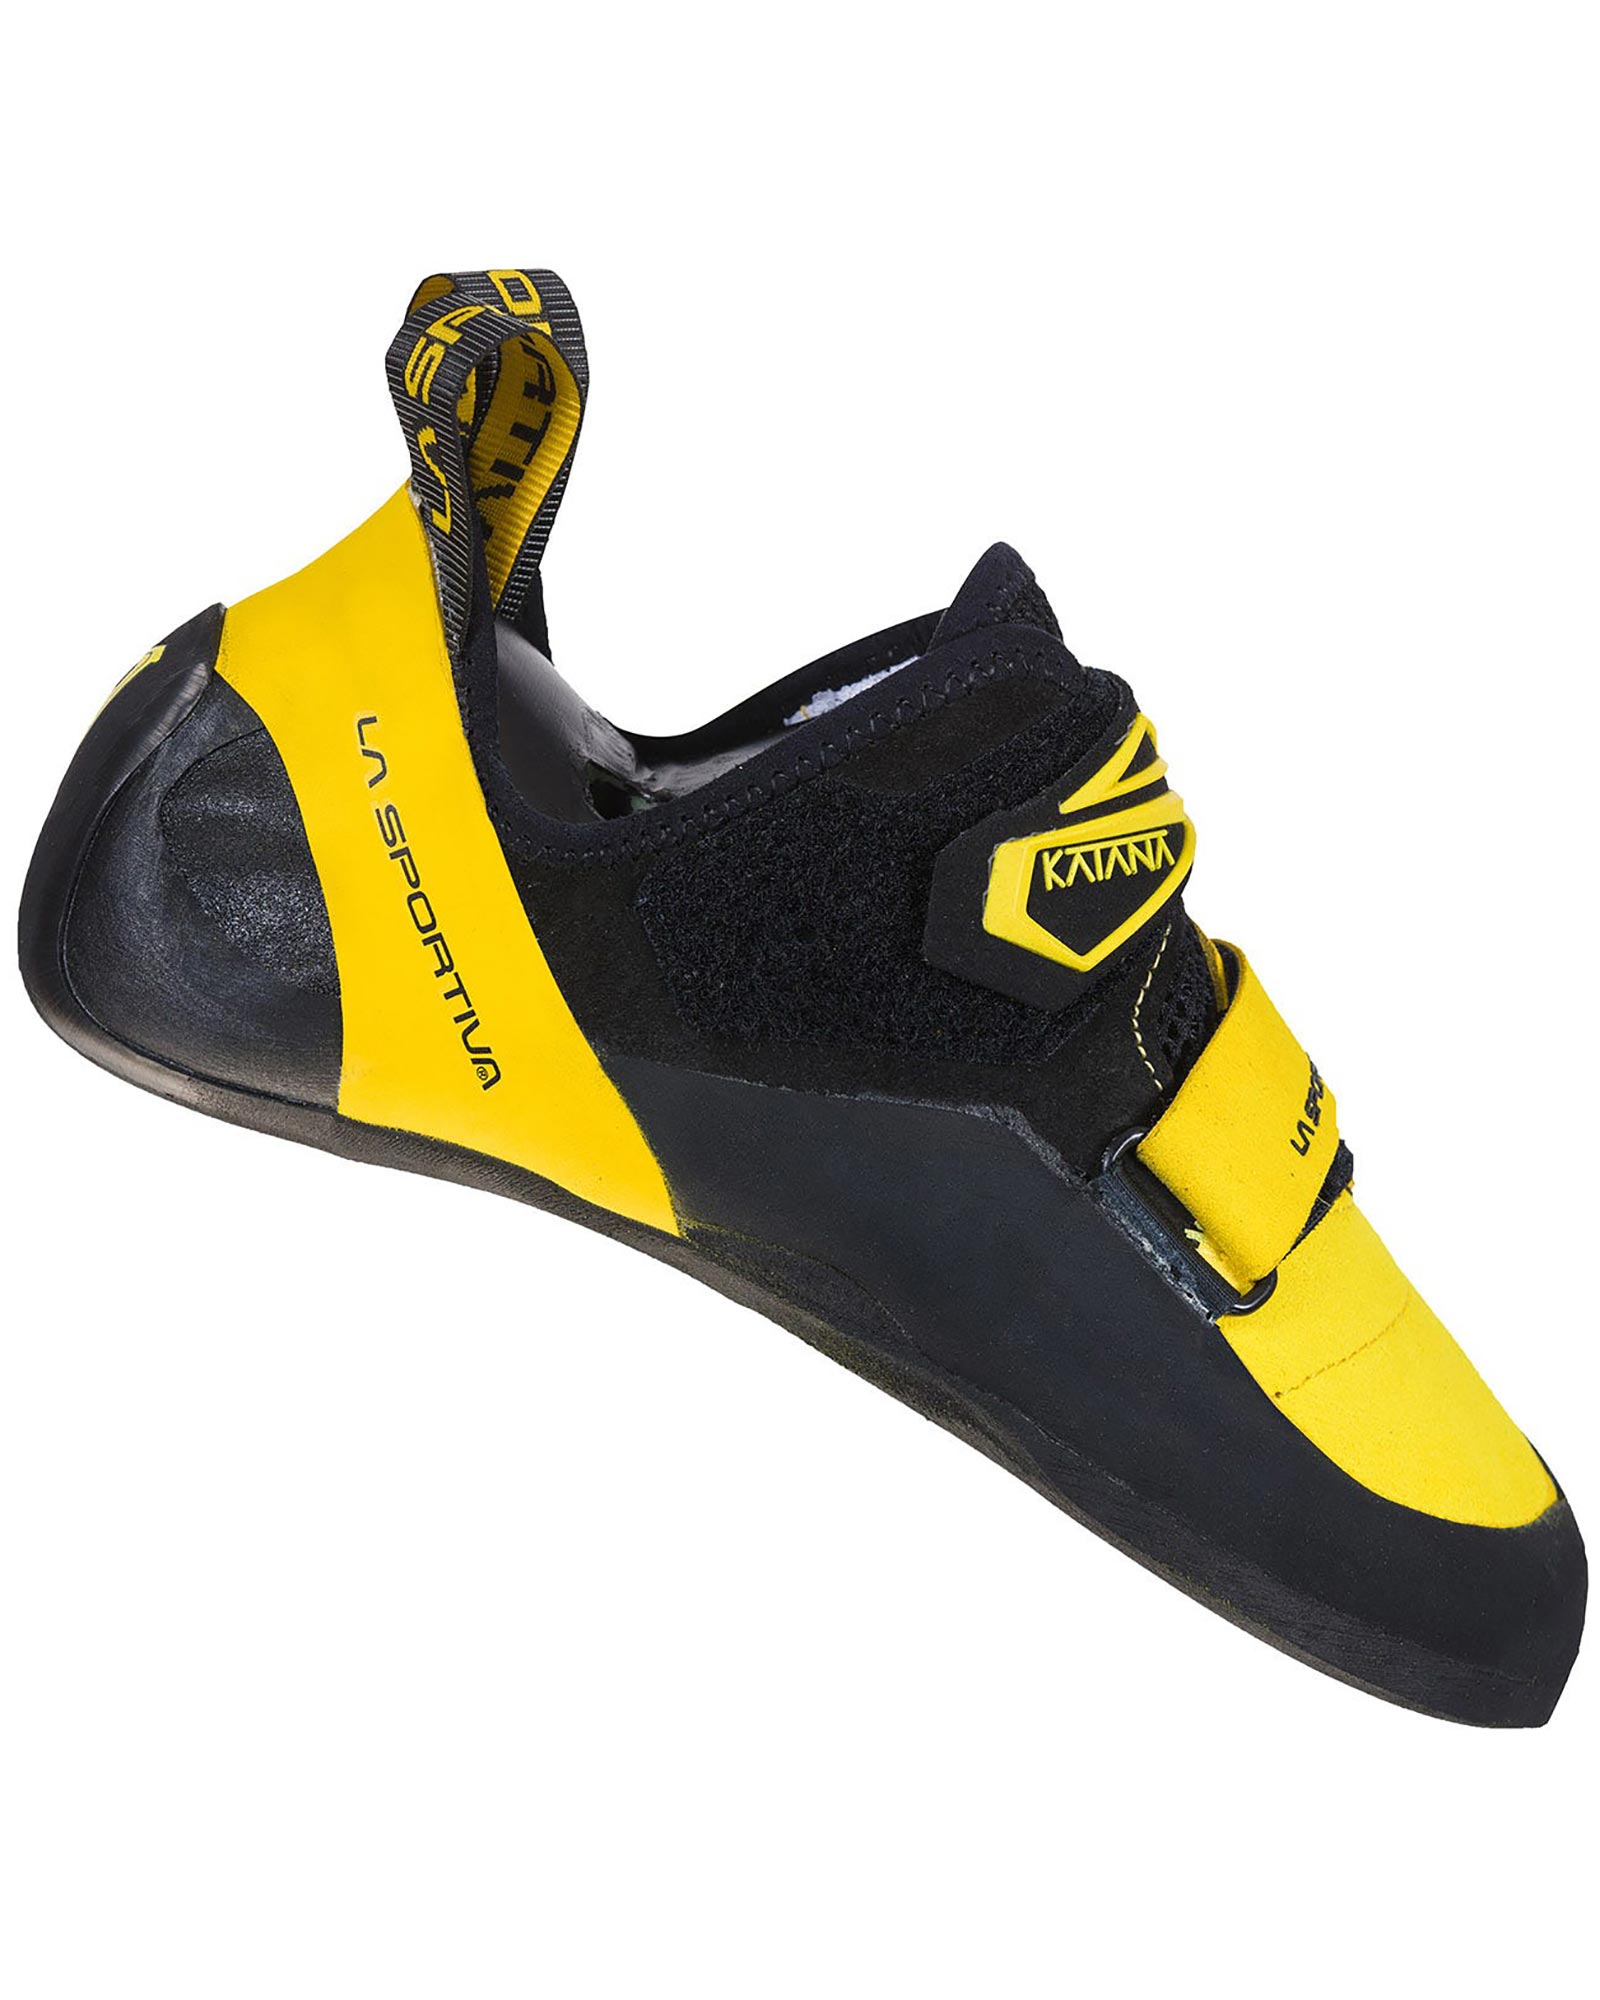 La Sportiva Katana Men’s Shoes - Yellow/Black EU 41